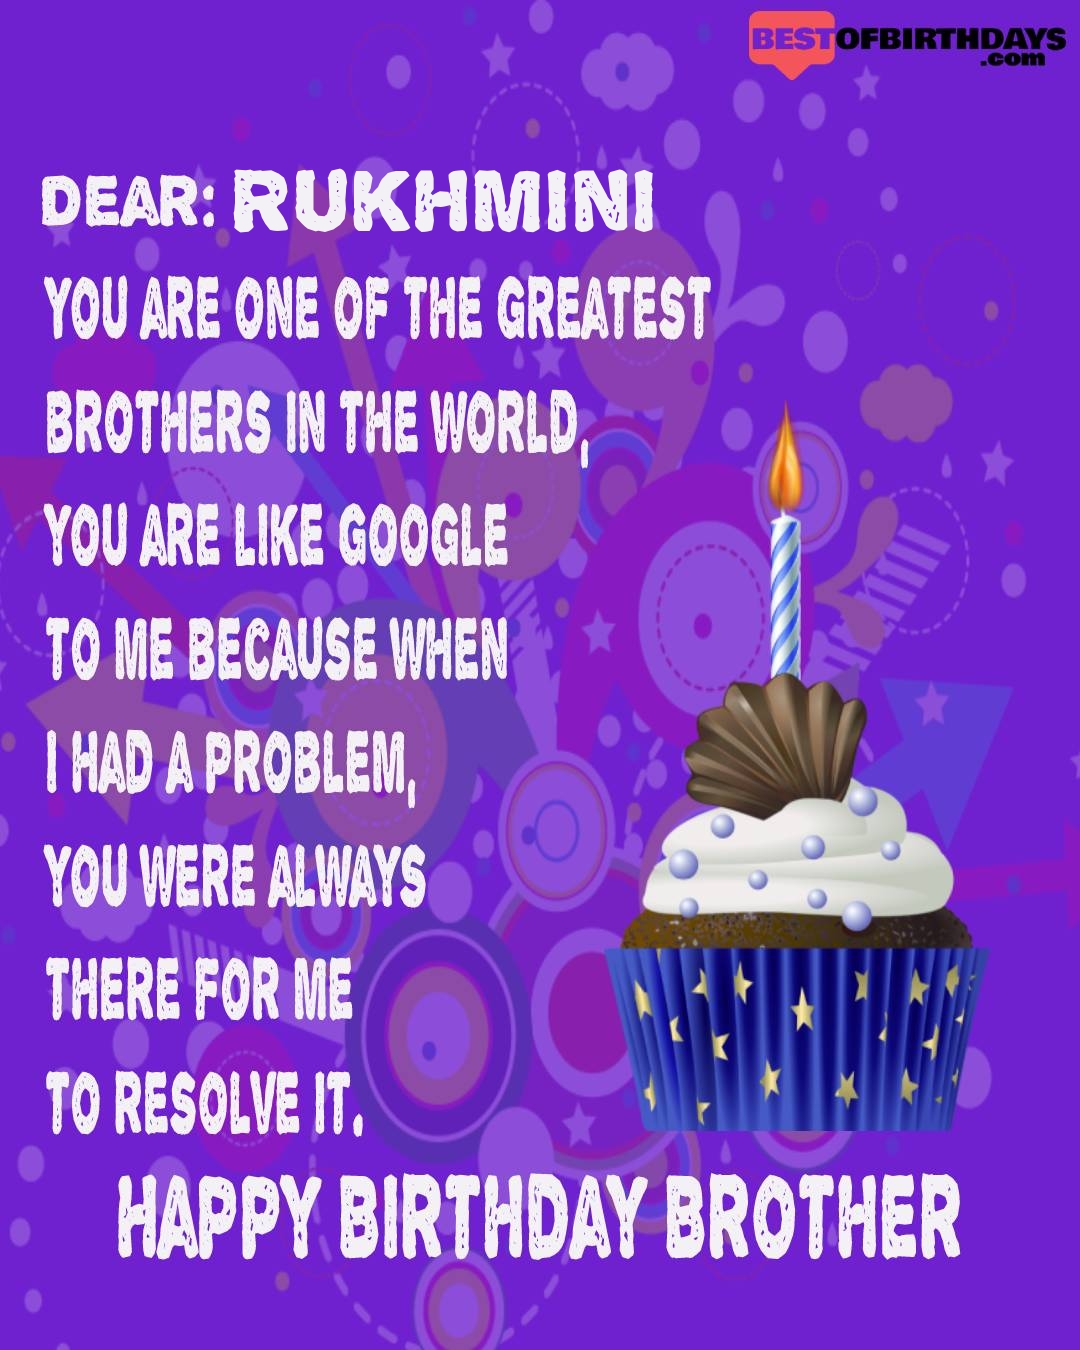 Happy birthday rukhmini bhai brother bro